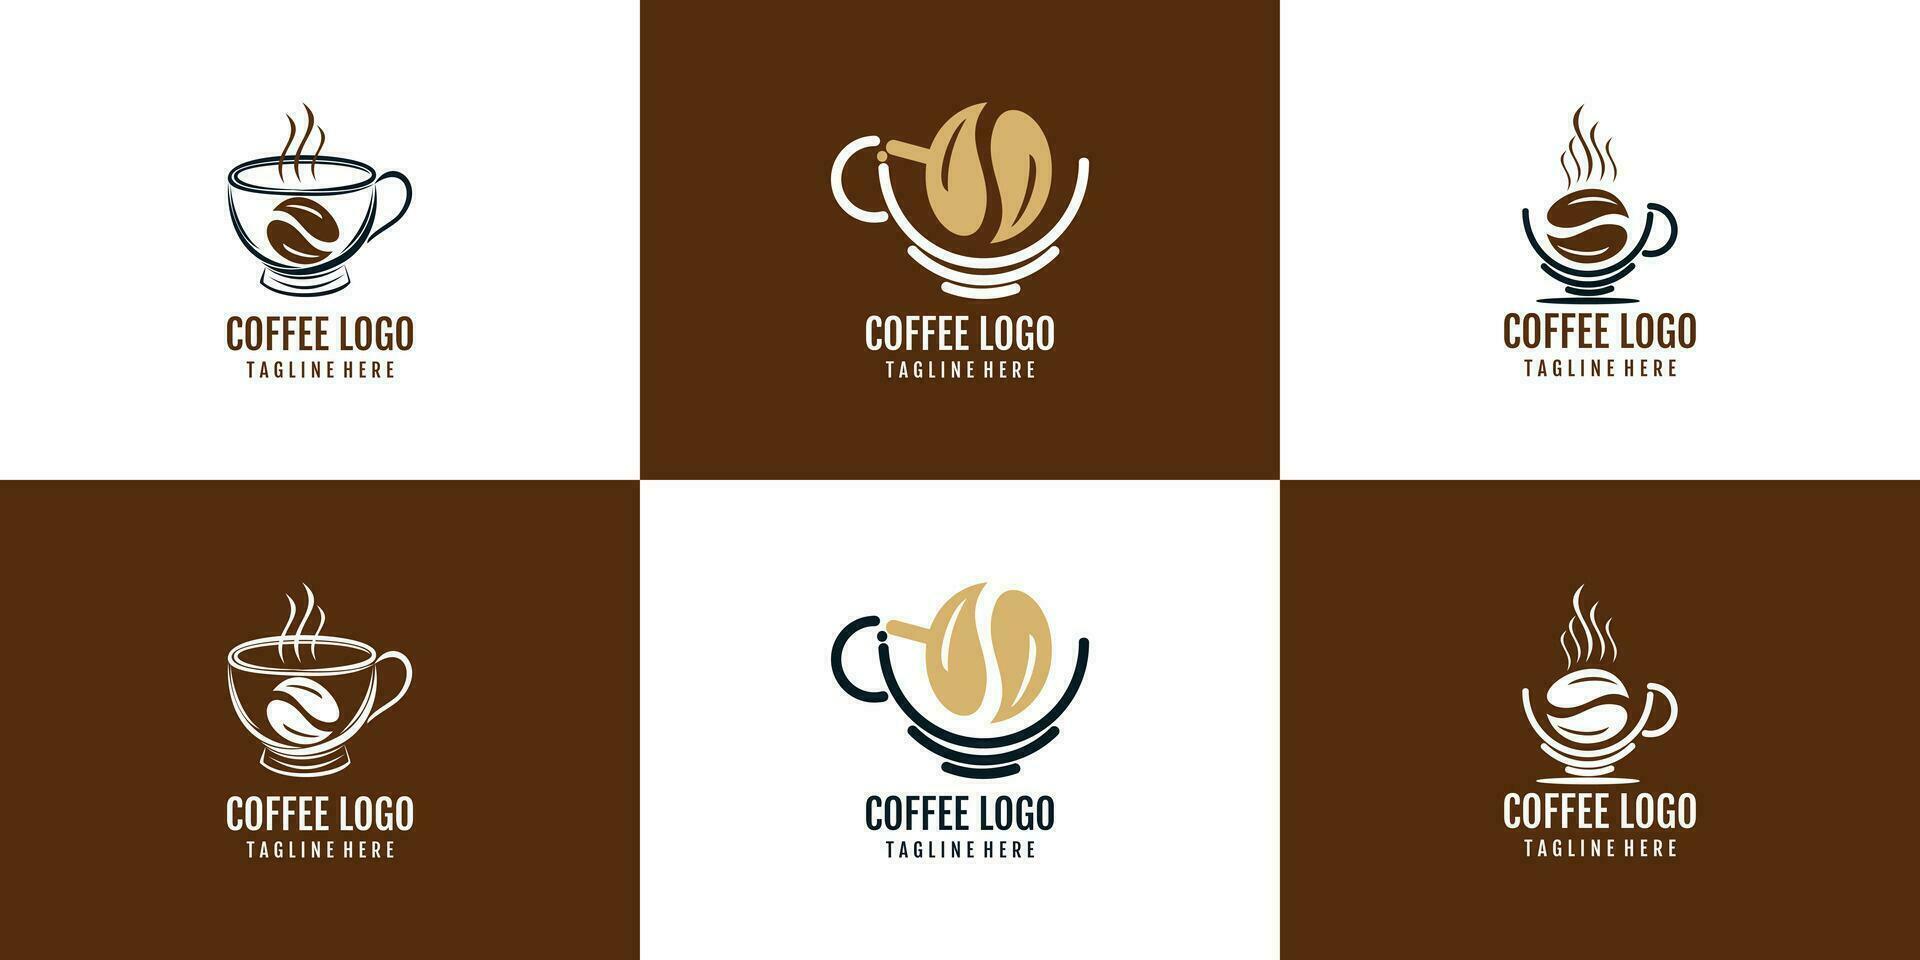 Coffee logo design collection with creative element concept Premium Vector